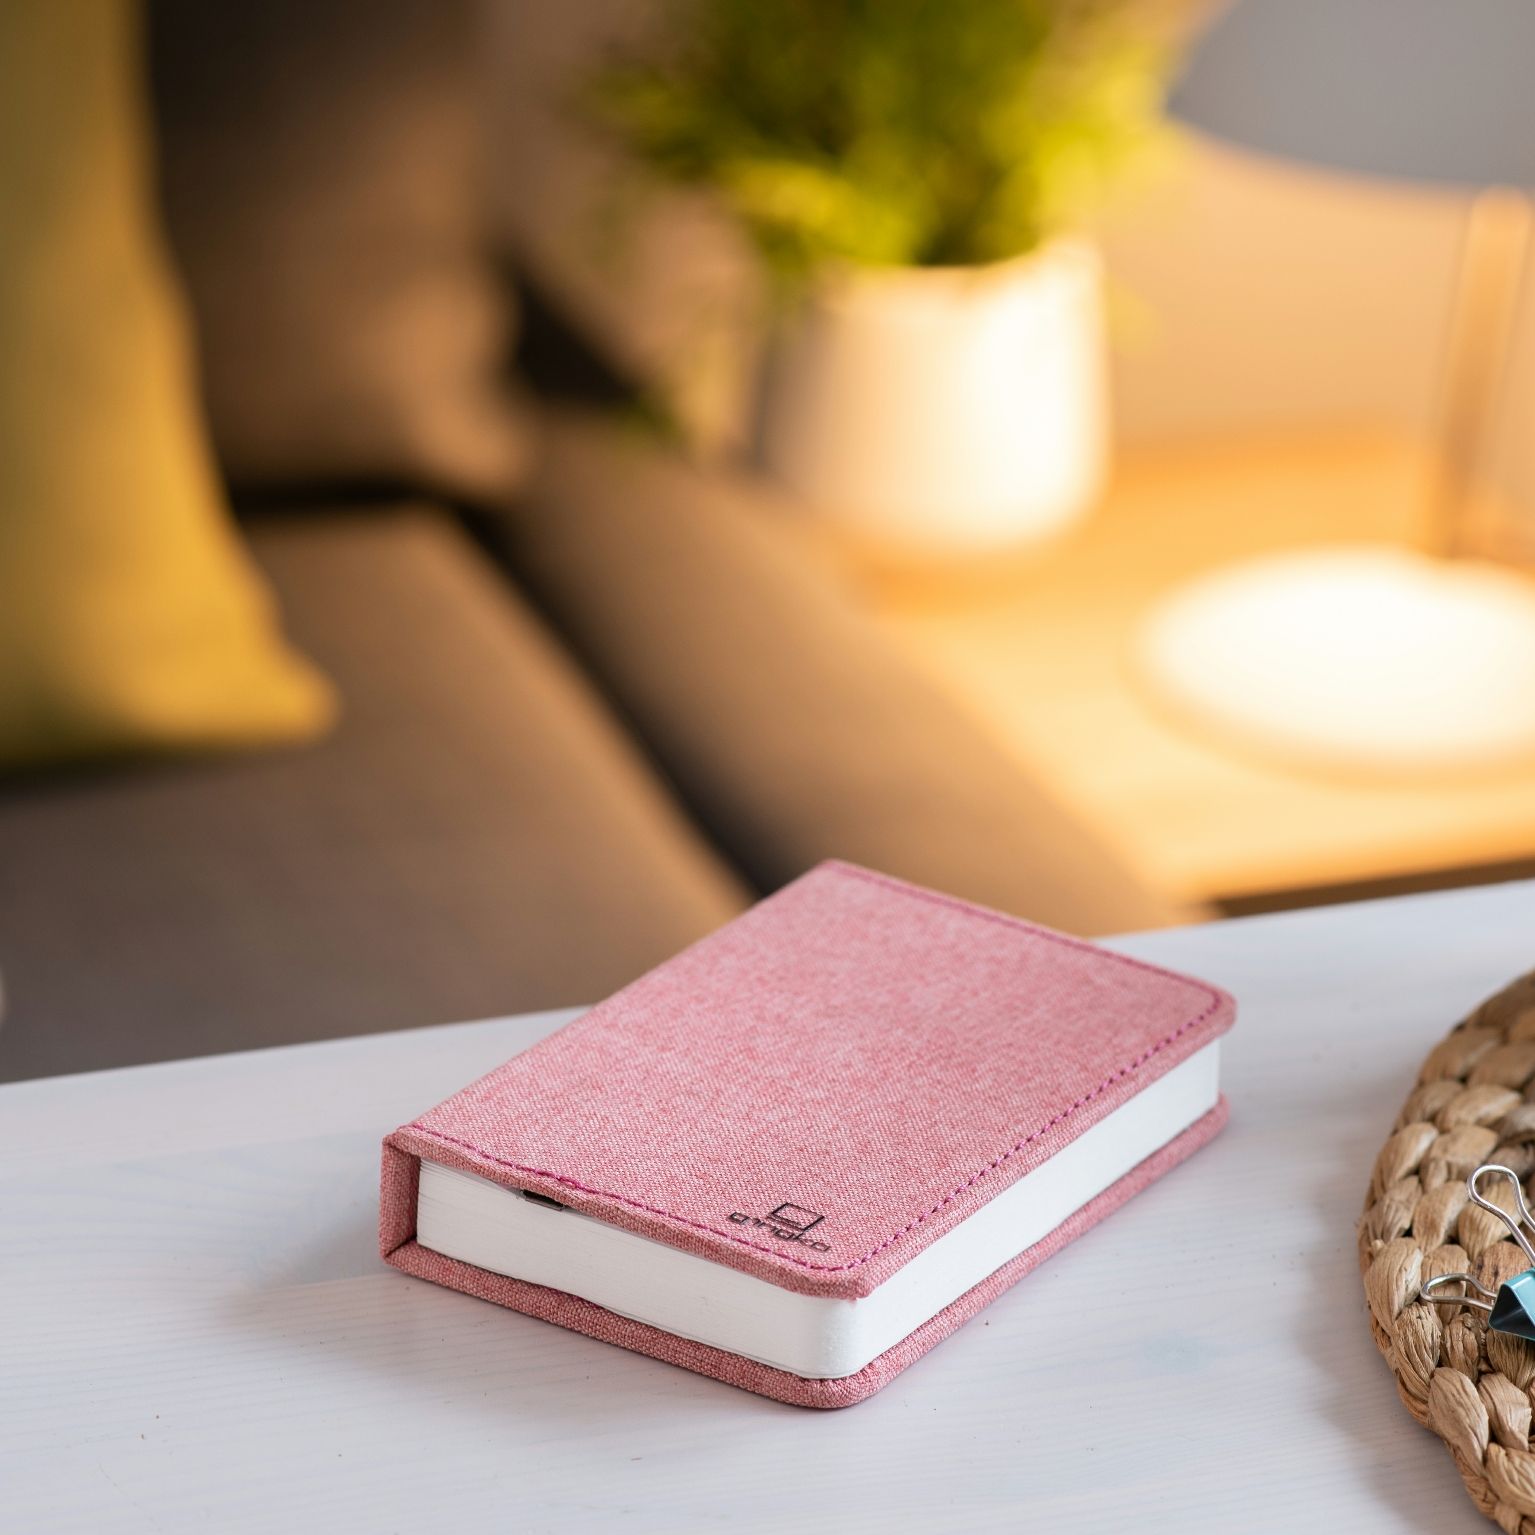 Gingko smart mini book light in pink on table